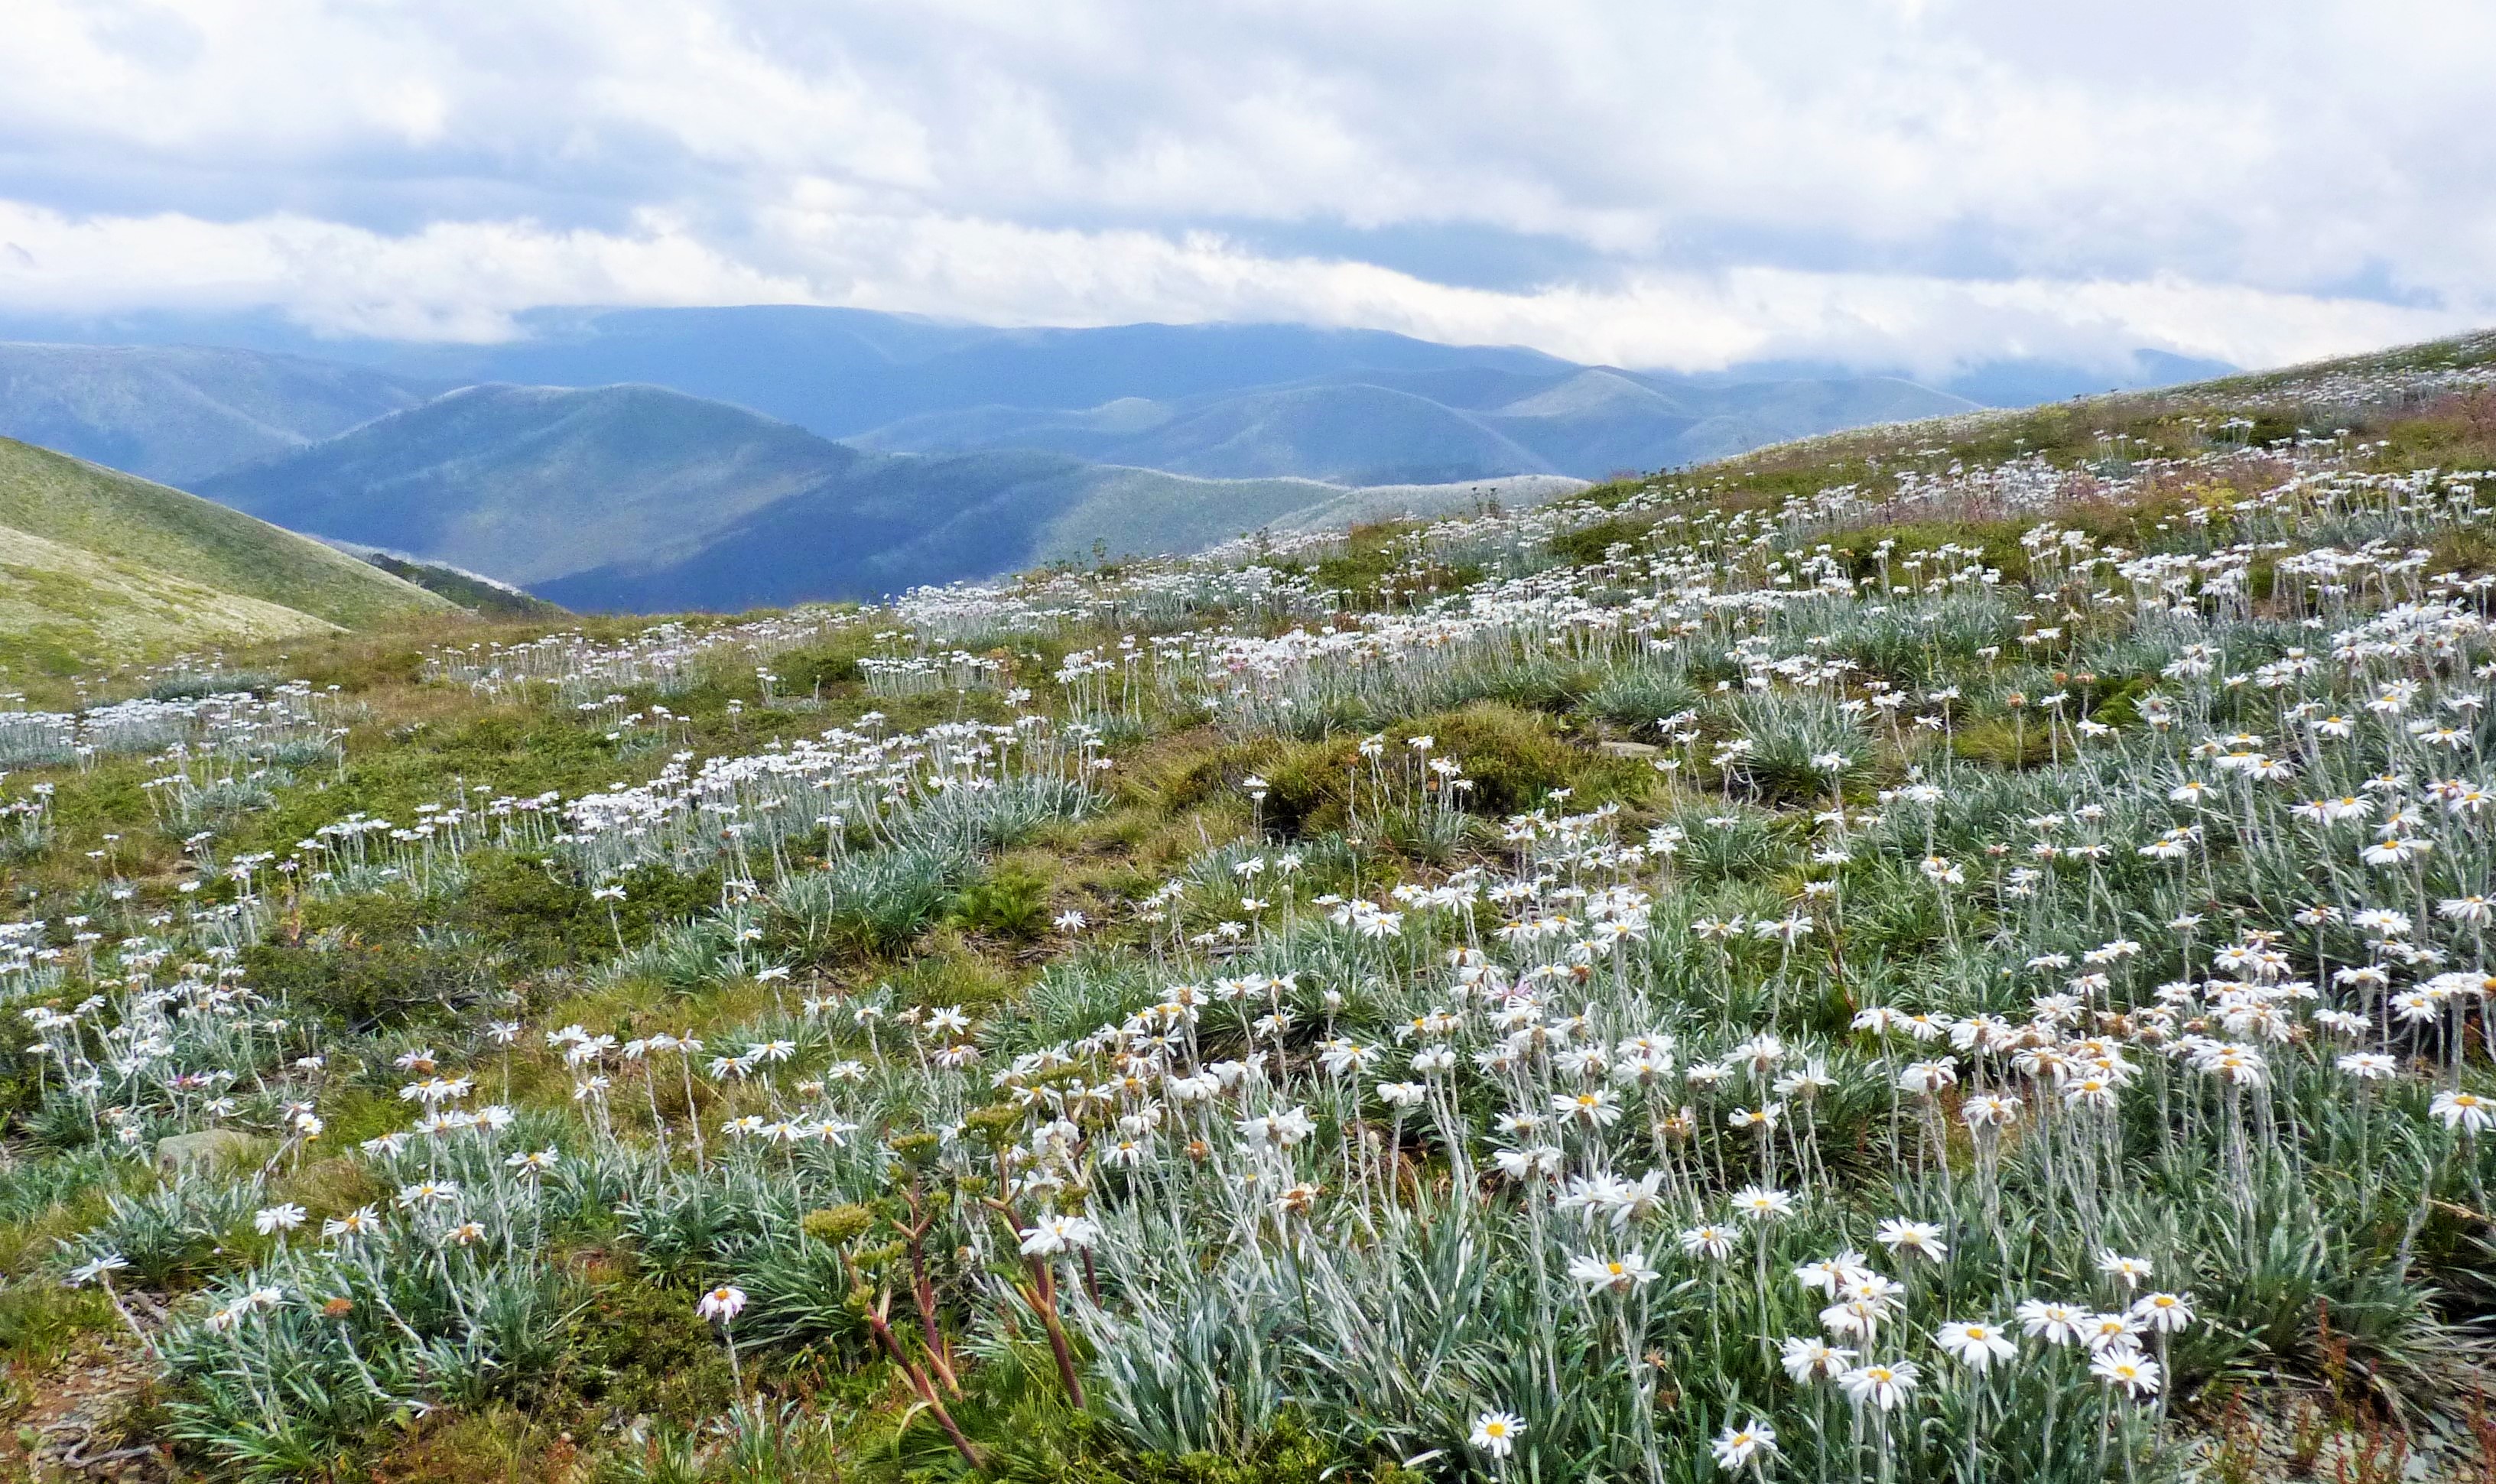 wildflower-carpet-of-alpine-daisies